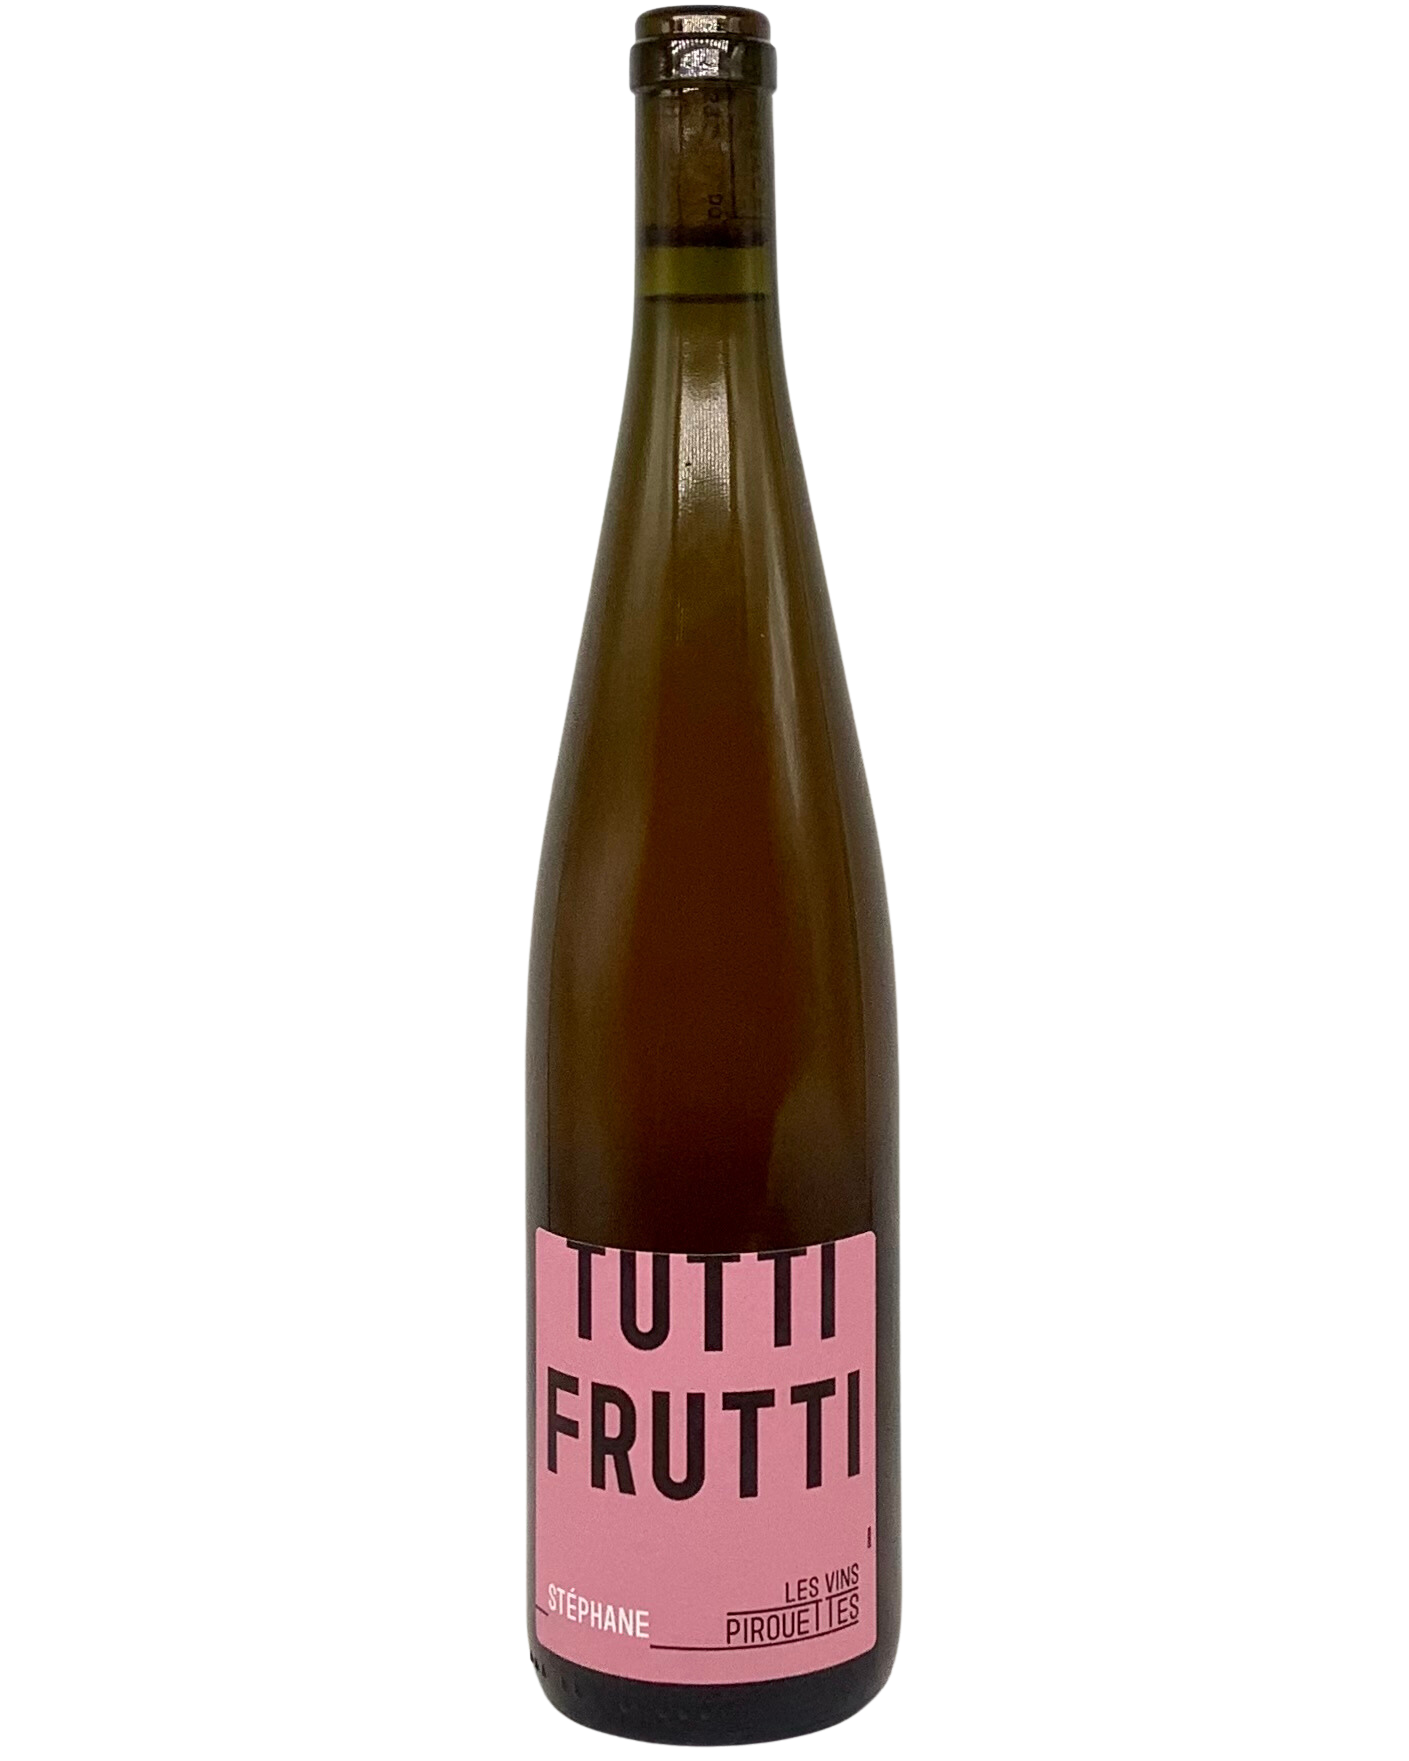 Les Vins Pirouettes "Tutti Frutti de Stéphane" Vin d'Alsace, France 2020 biodynamic newarrival orange organic unfiltered vegan